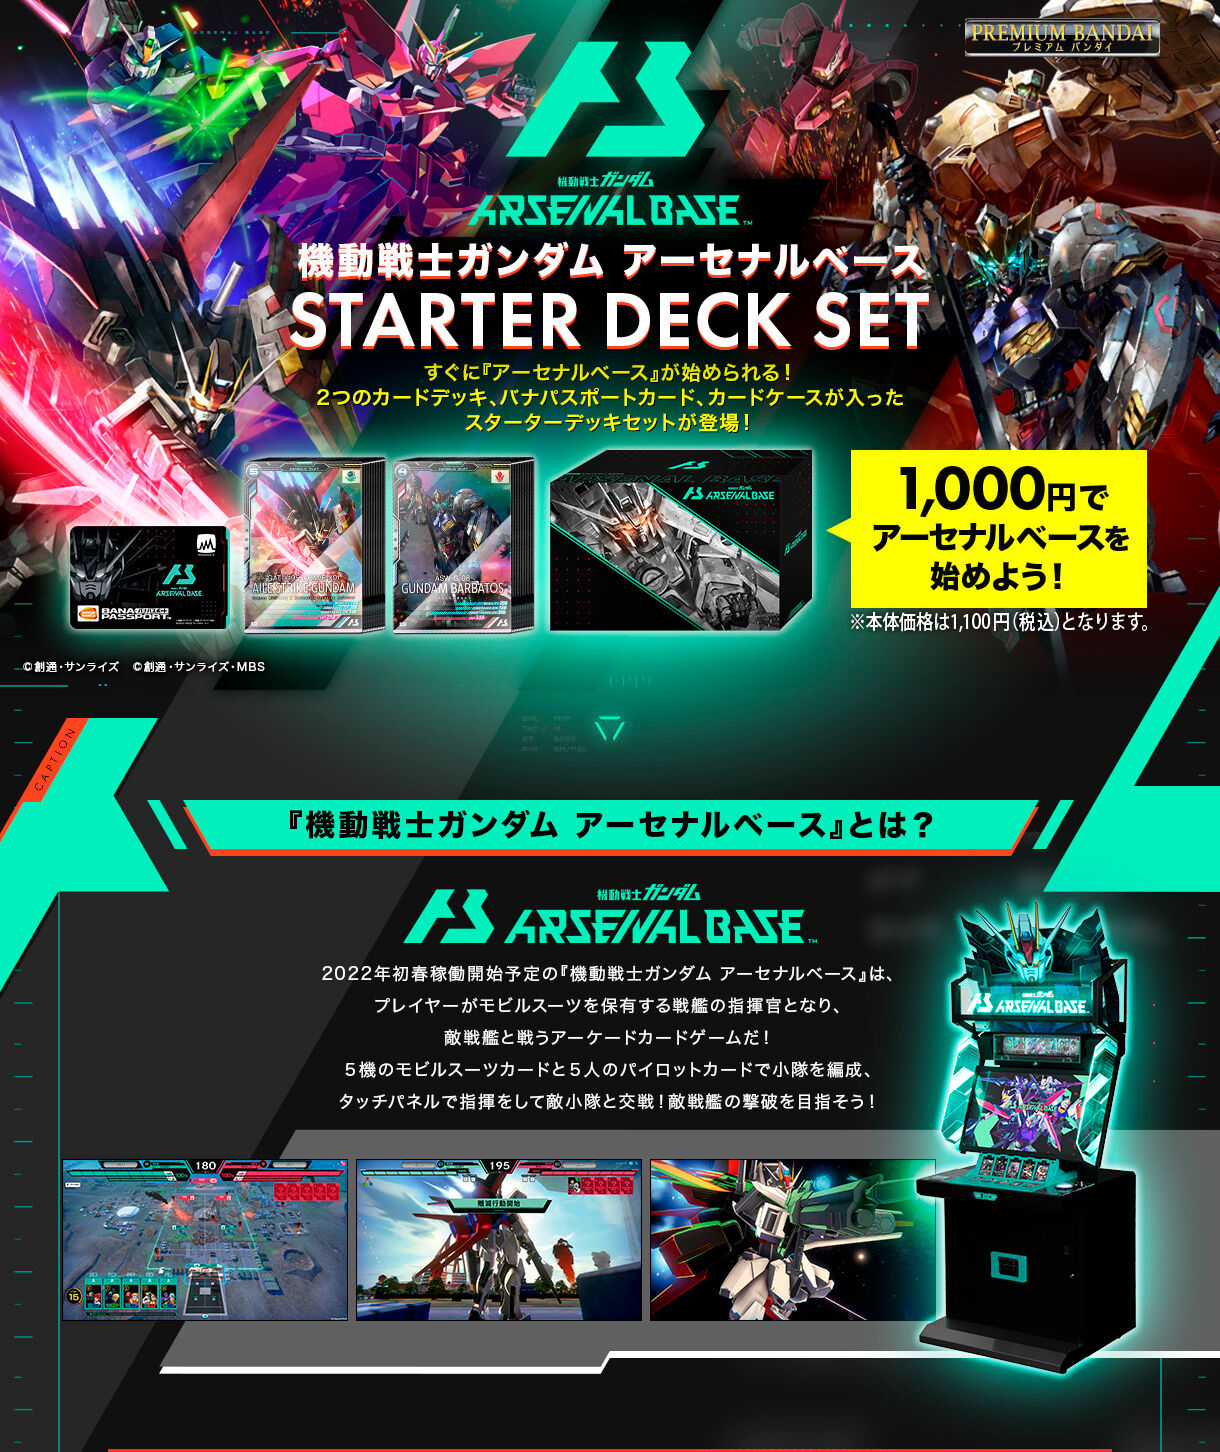 Mobile Suit Gundam Arsenal Base Starter Deck Set